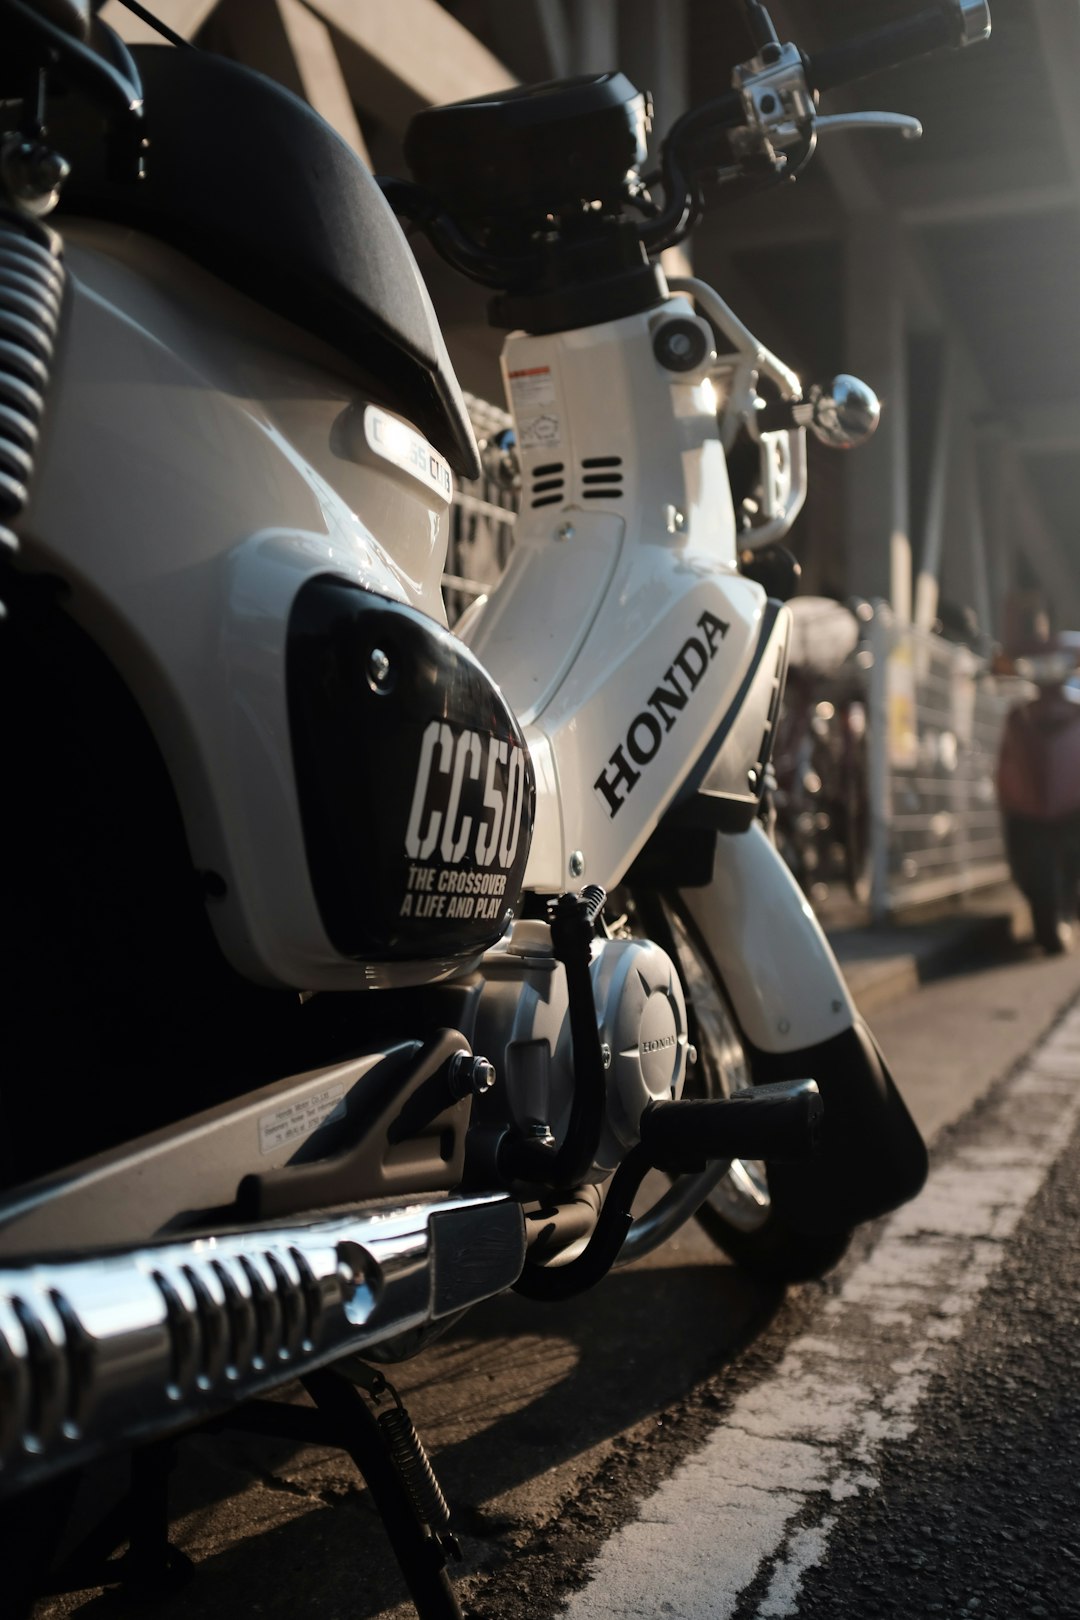 white and black Honda motorcycle